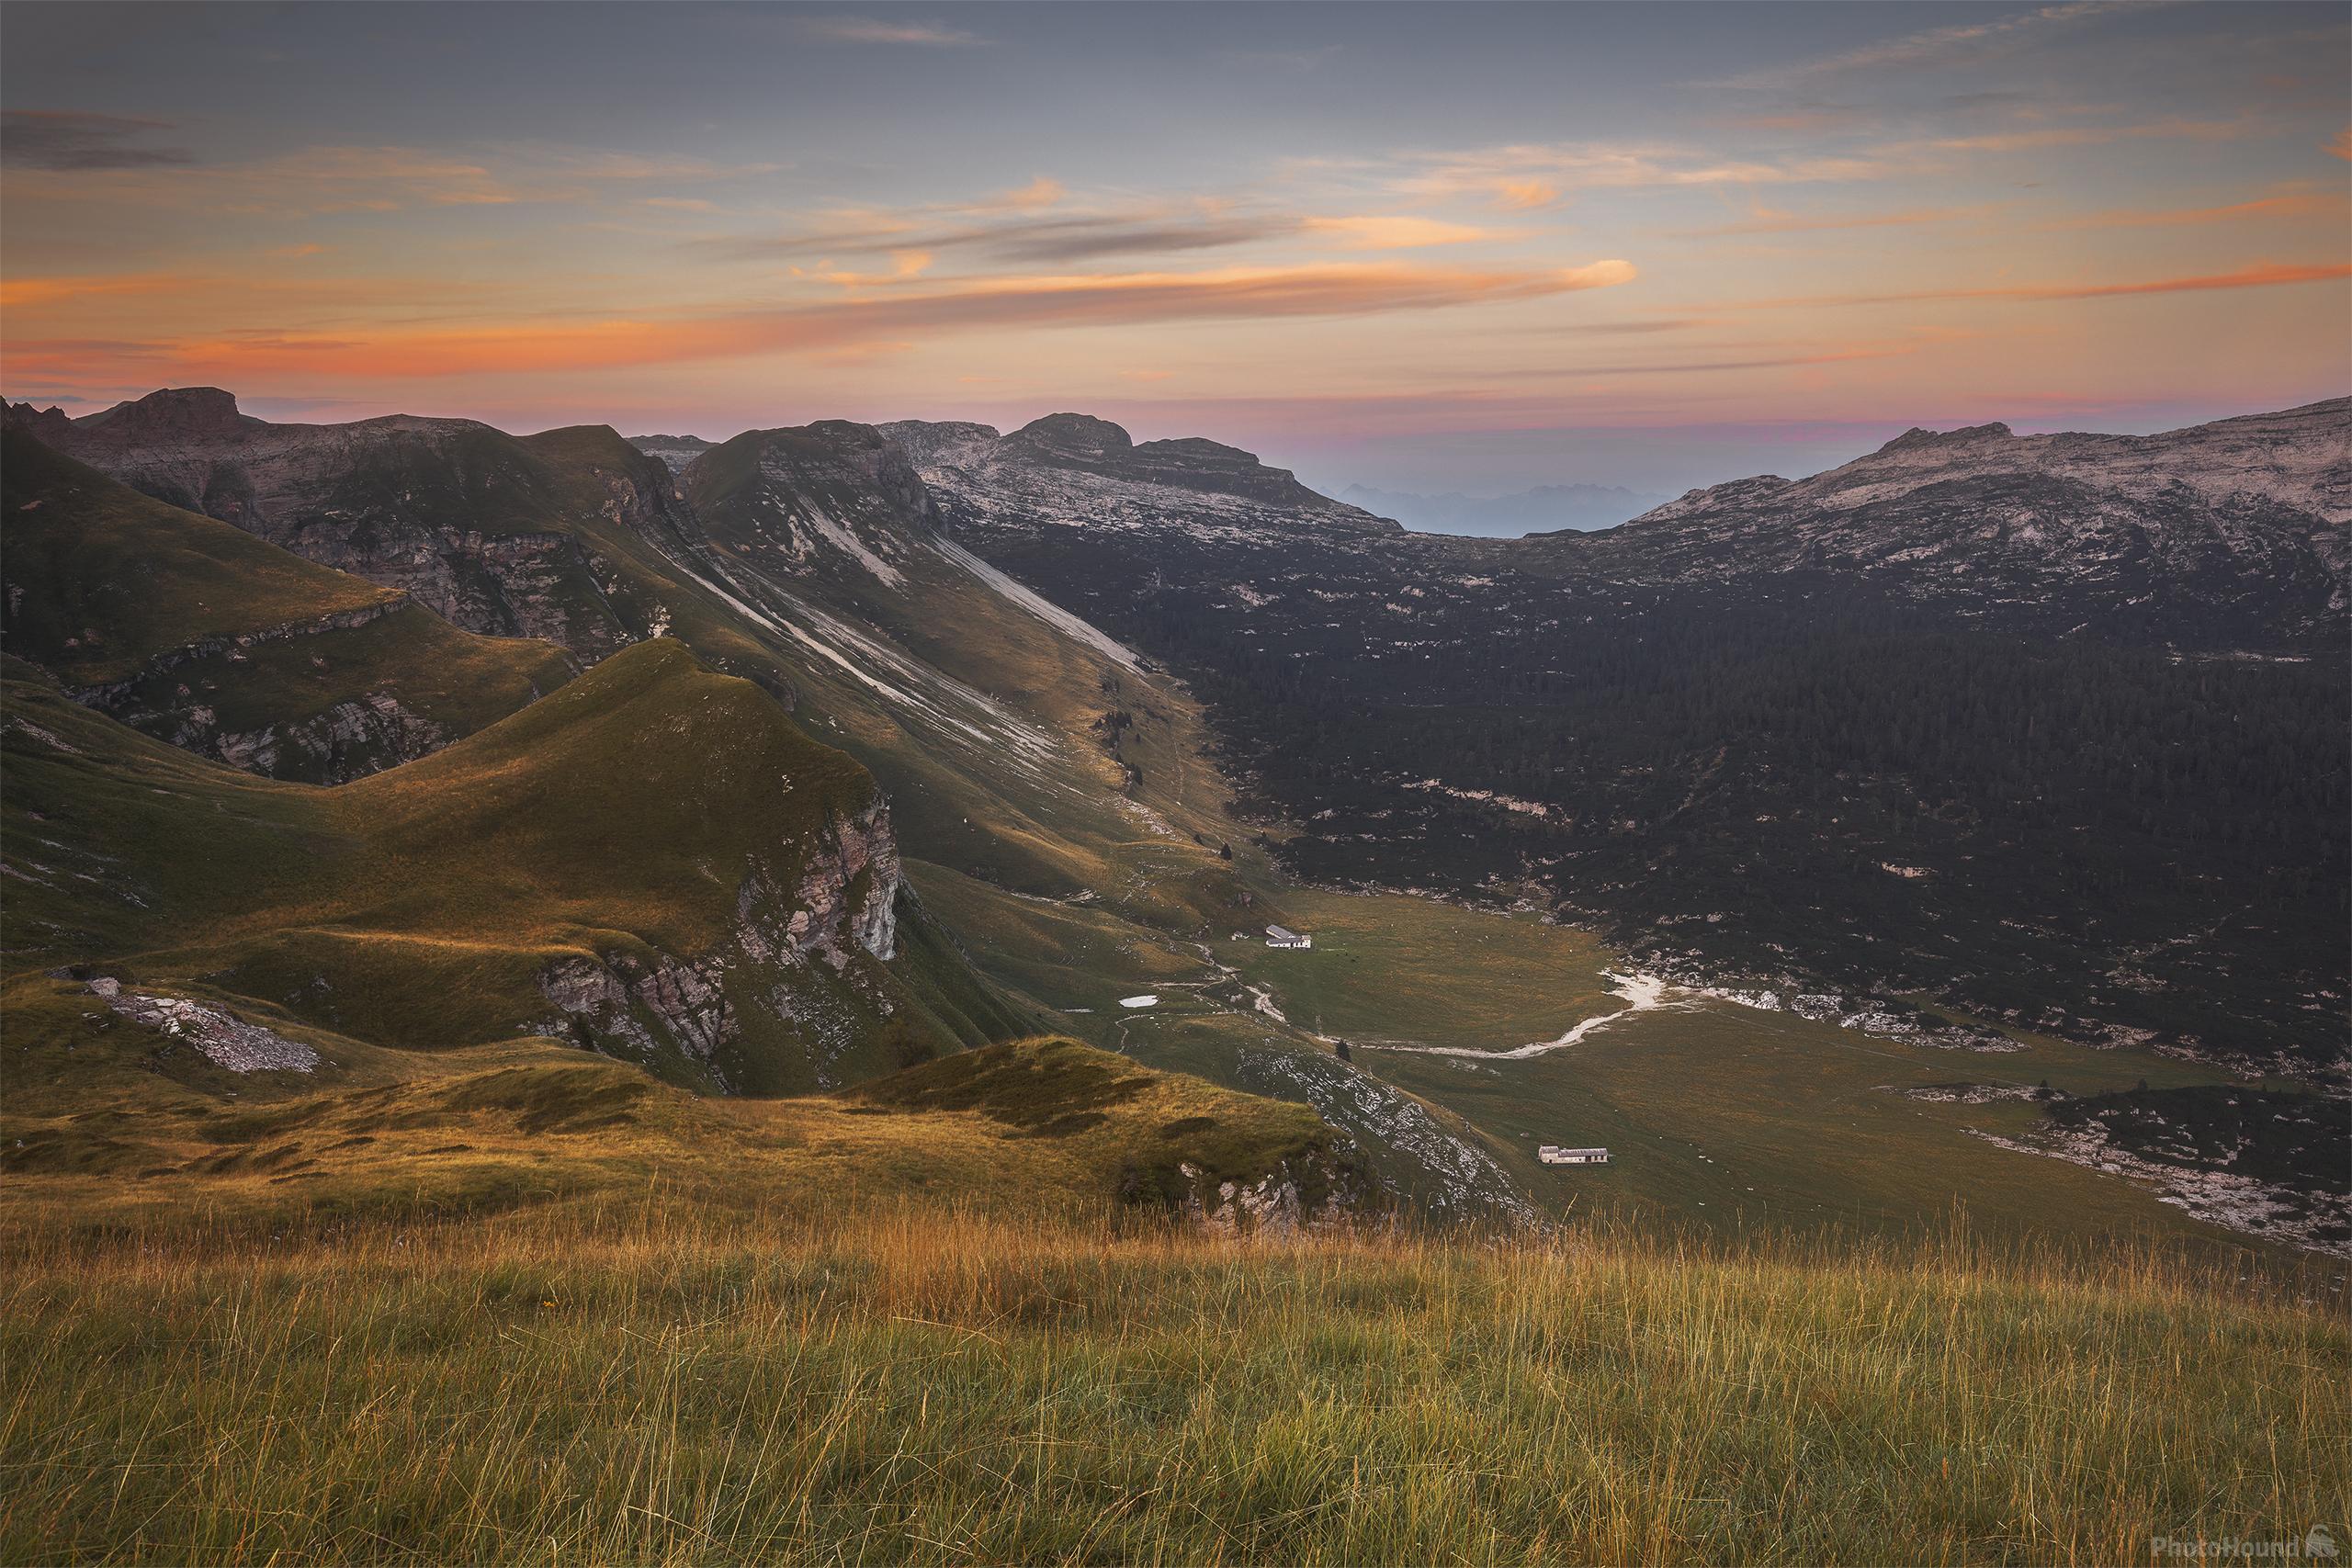 Image of Vette Feltrine (Feltre Dolomites) – Erera Plateau by Dino Marsango